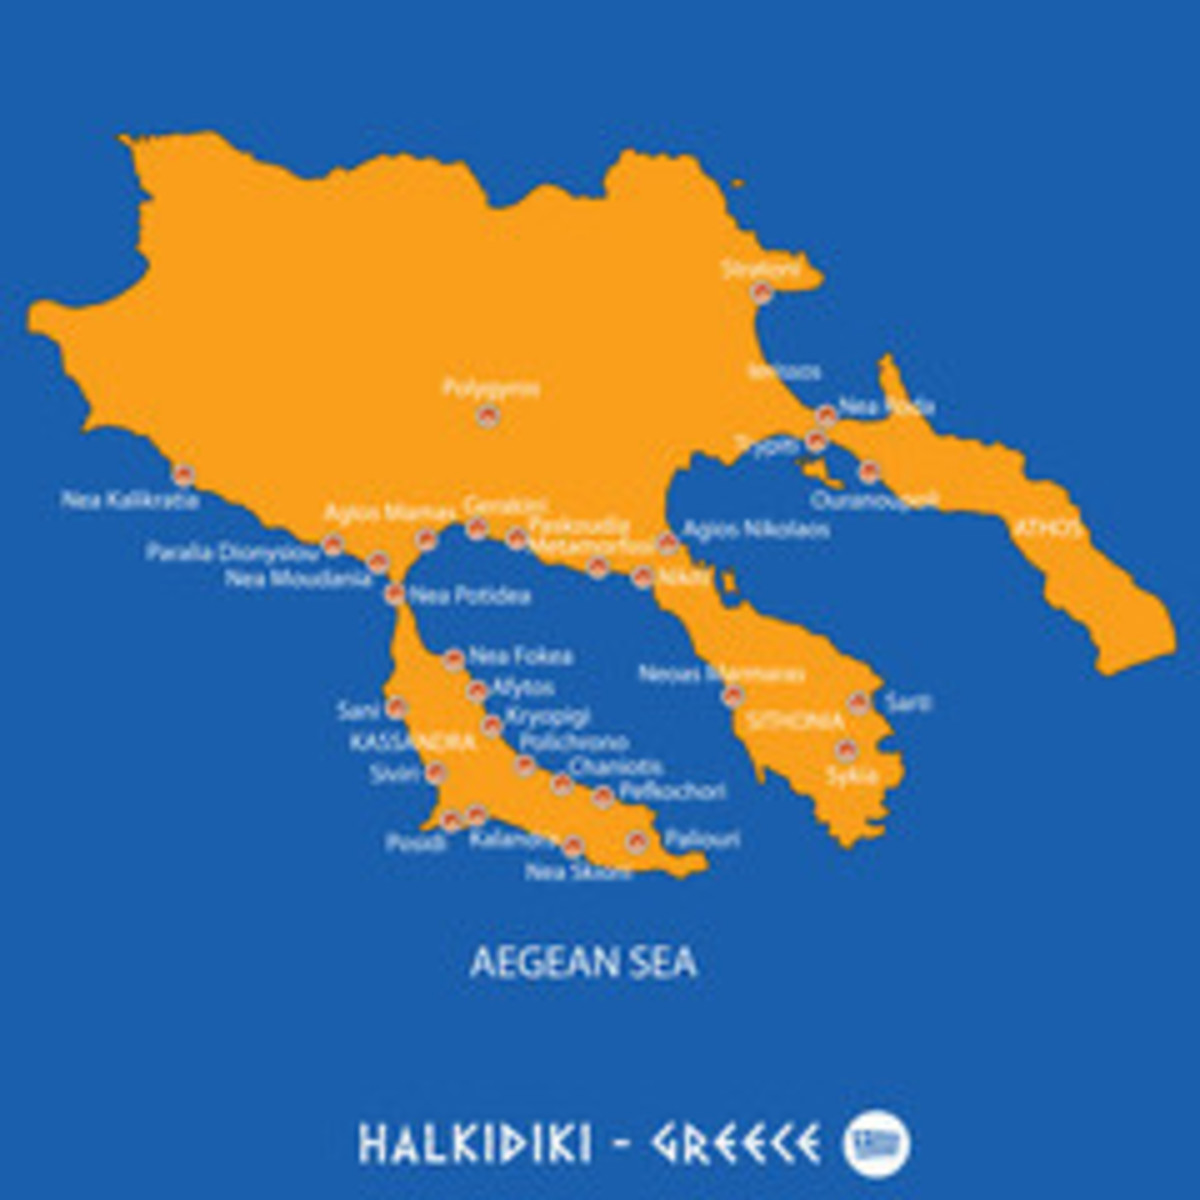 Peninsula of Halkidiki in Greece orange map and blue background